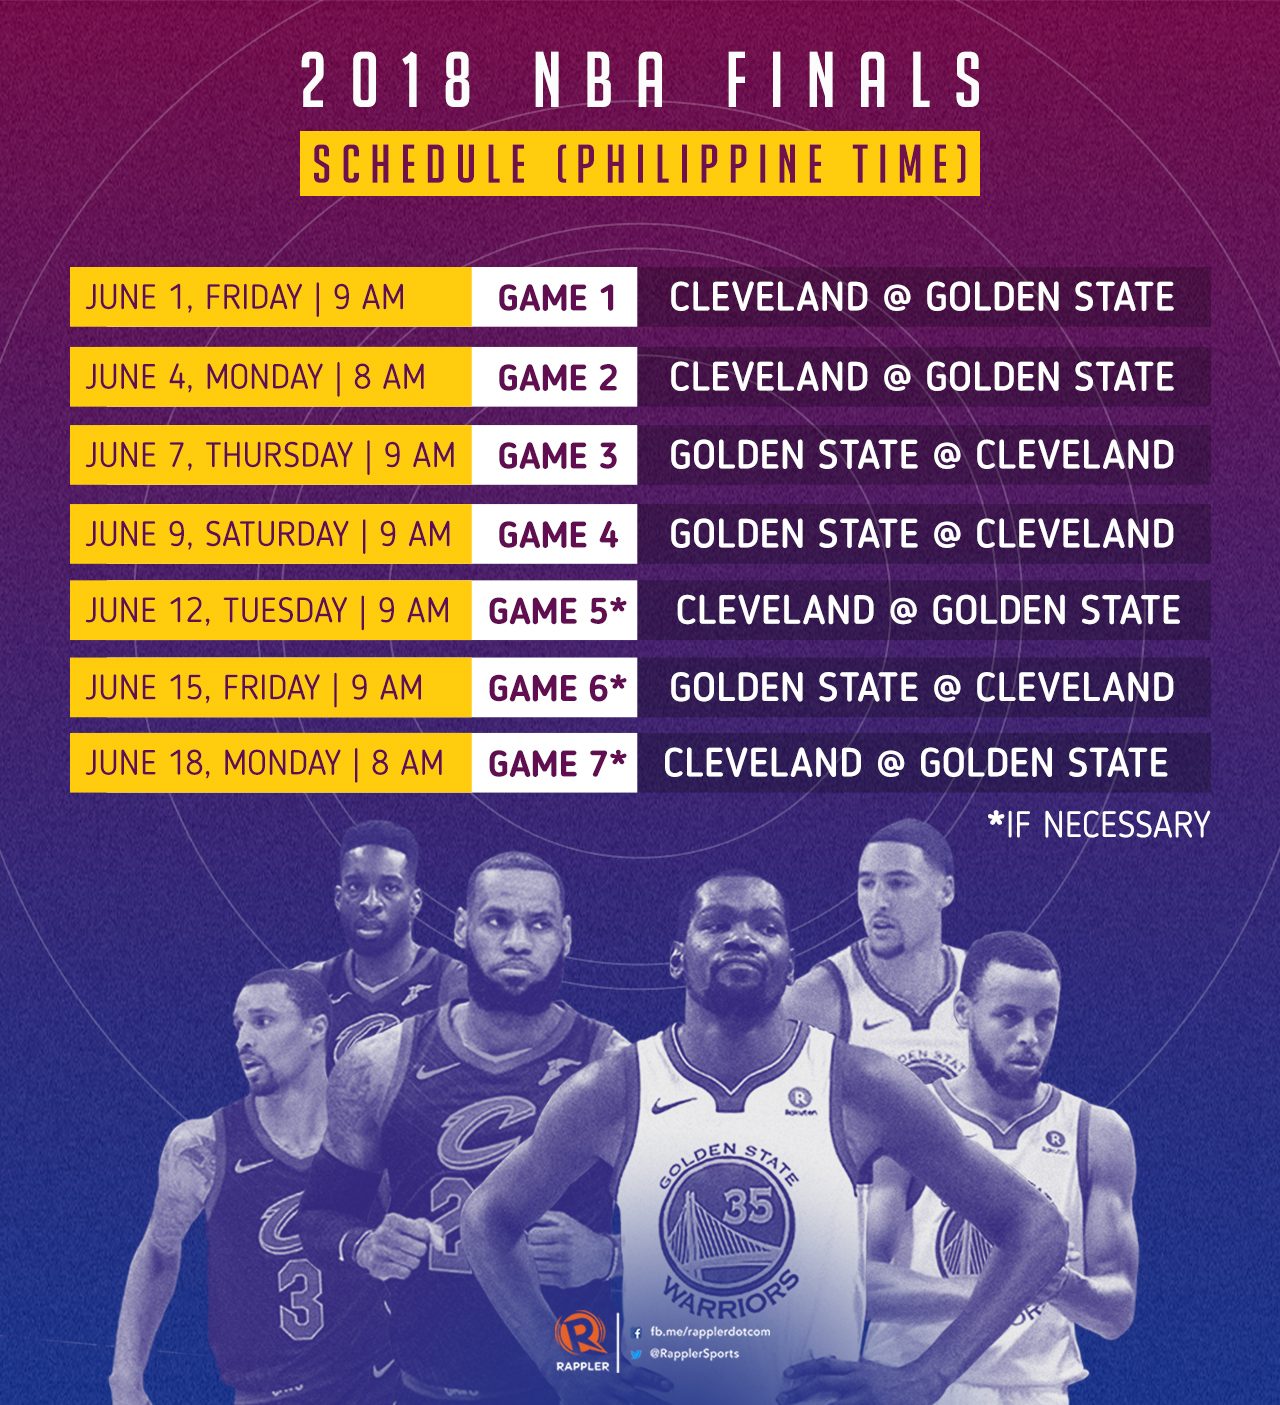 LOOK NBA Finals 2018 schedule, Philippine time